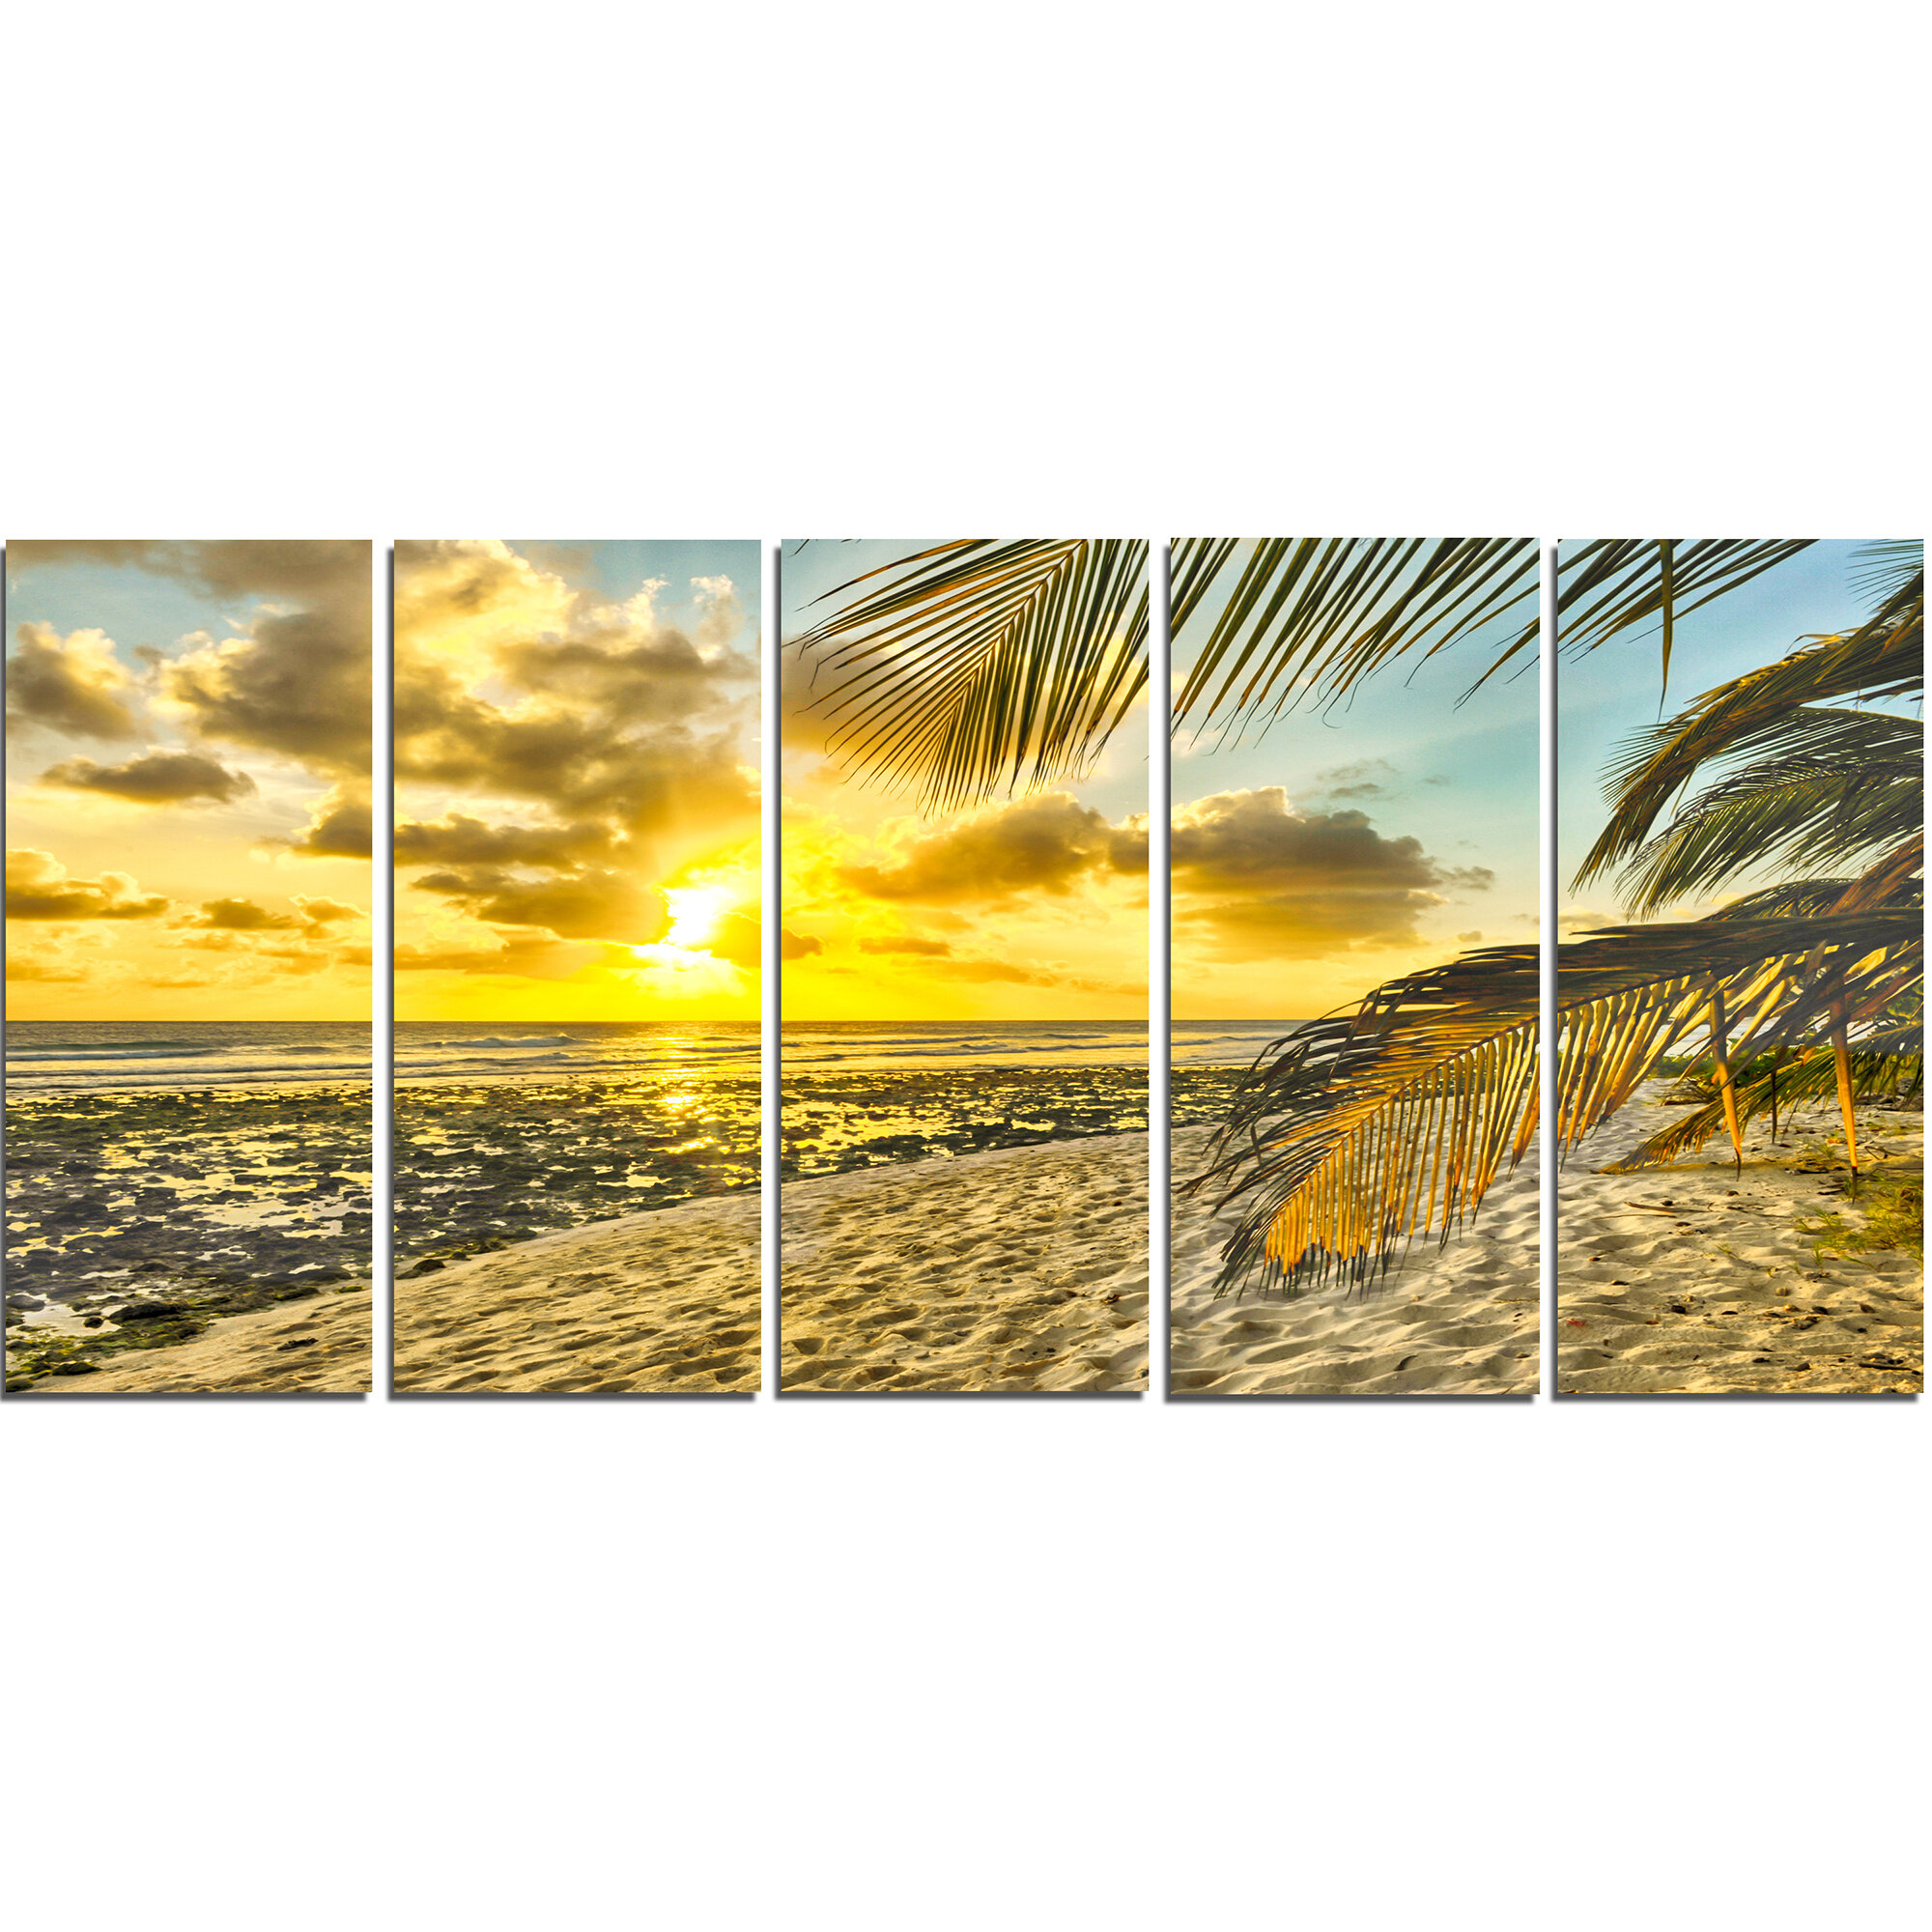 Designart White Caribbean Beach With Palms 5 Piece Wall Art On Wrapped Canvas Set Wayfair